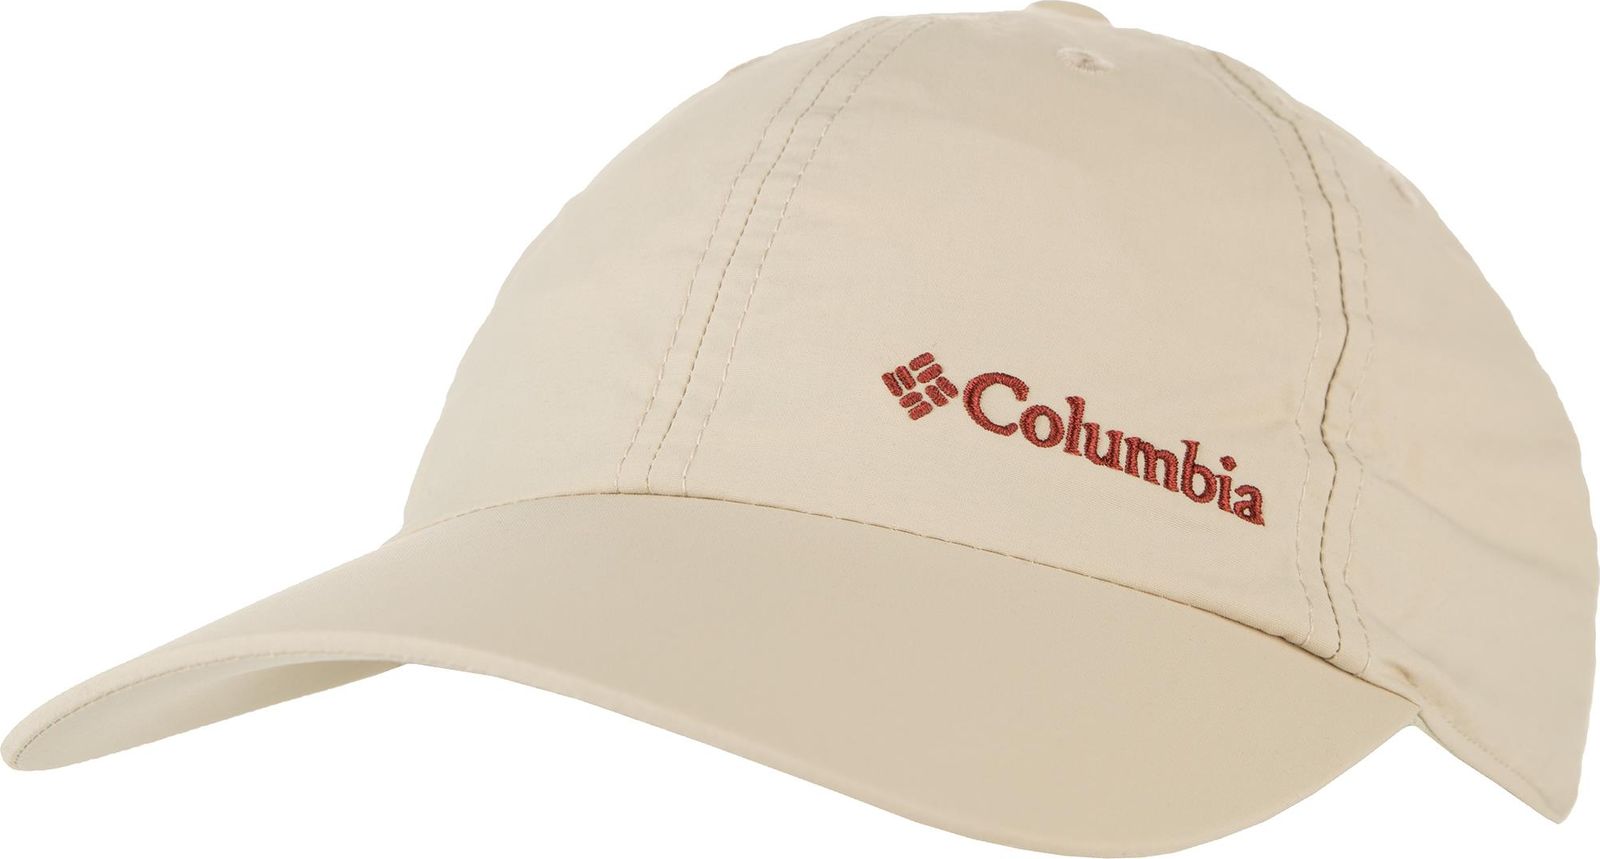 M 2 hat. Columbia Tech Shade II hat. Бейсболка Columbia Tech Shade II Ball cap. Кепка Columbia Omni Shade. Кепка Columbia бежевая.